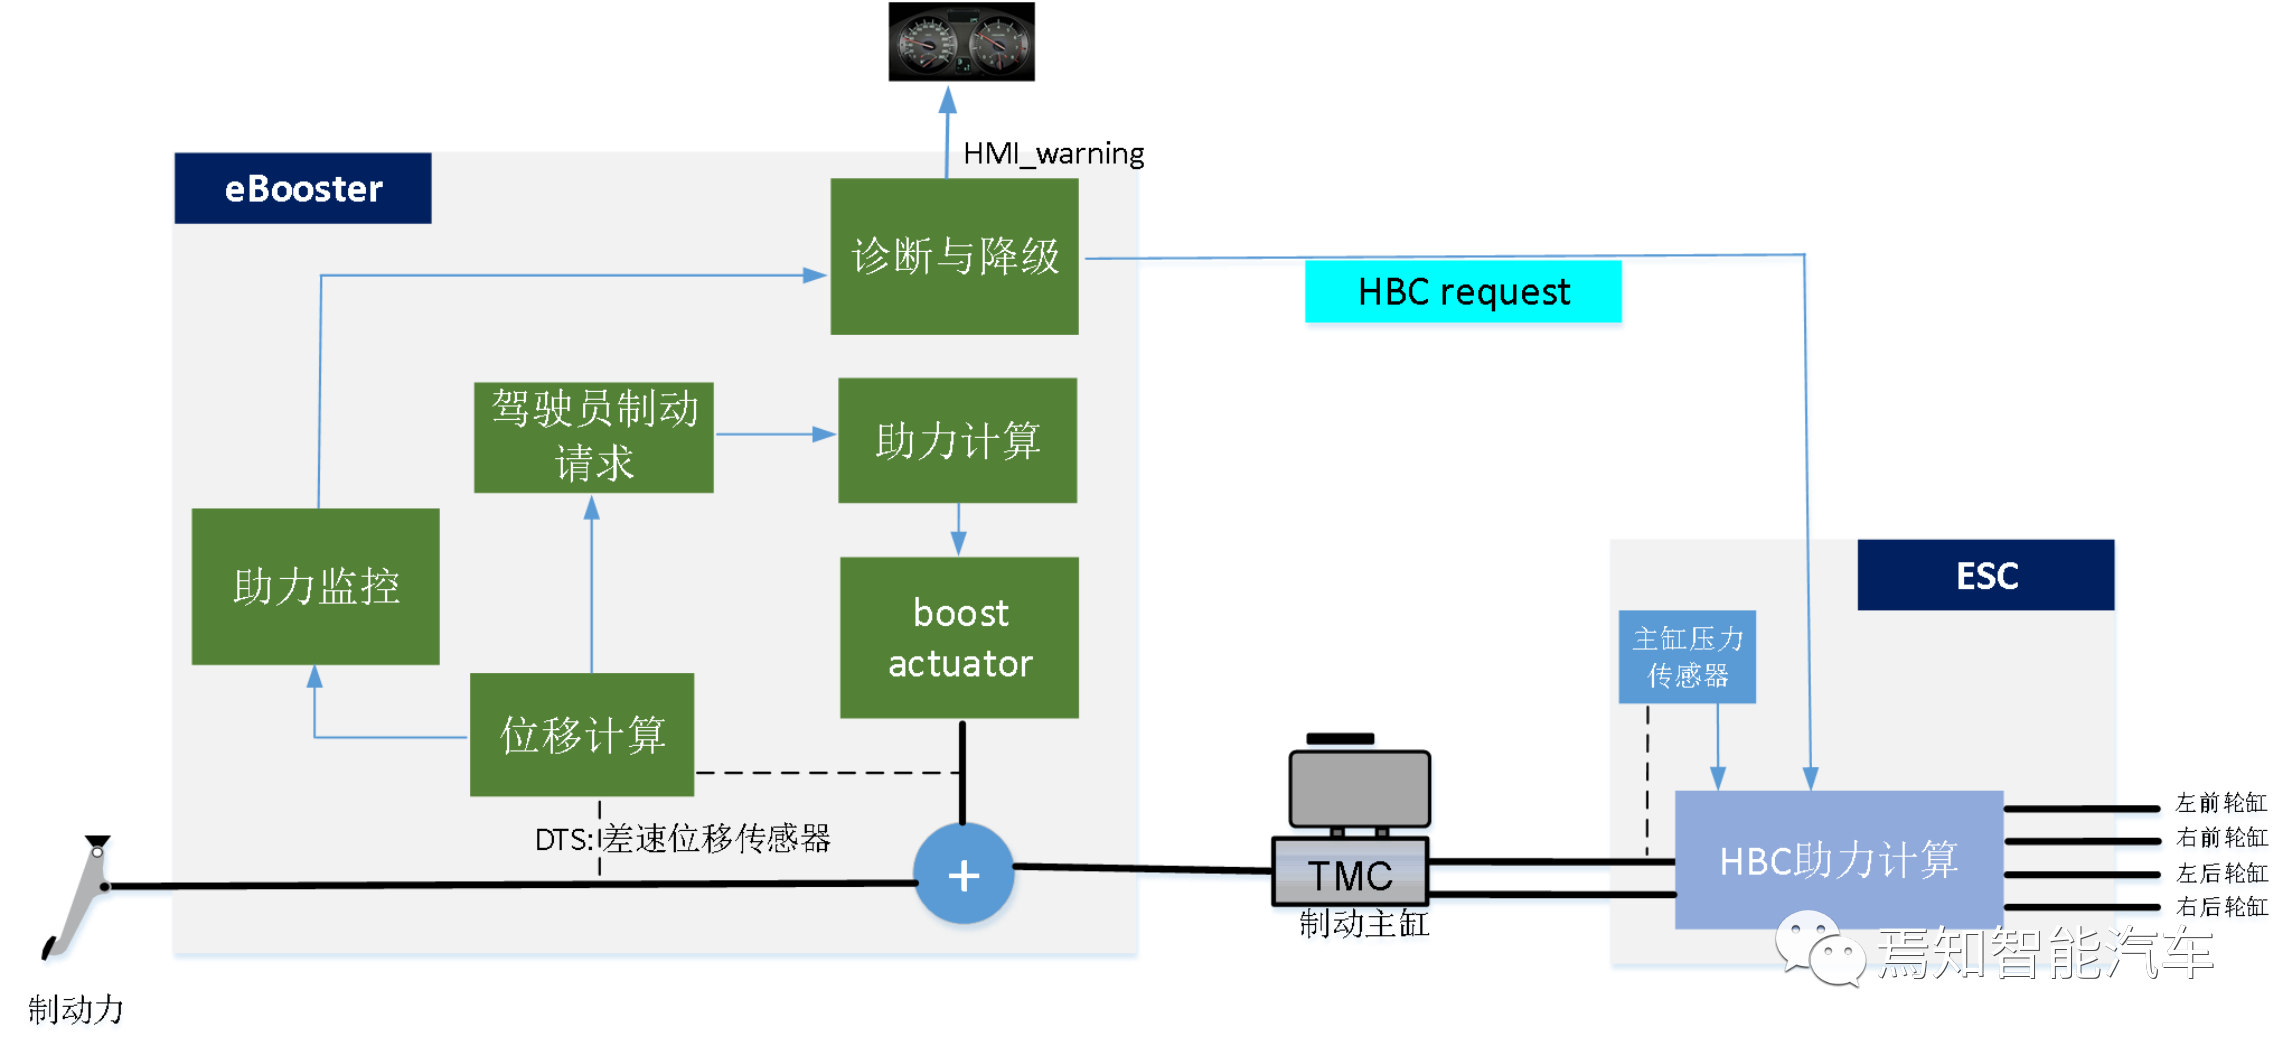 HBC System Architecture